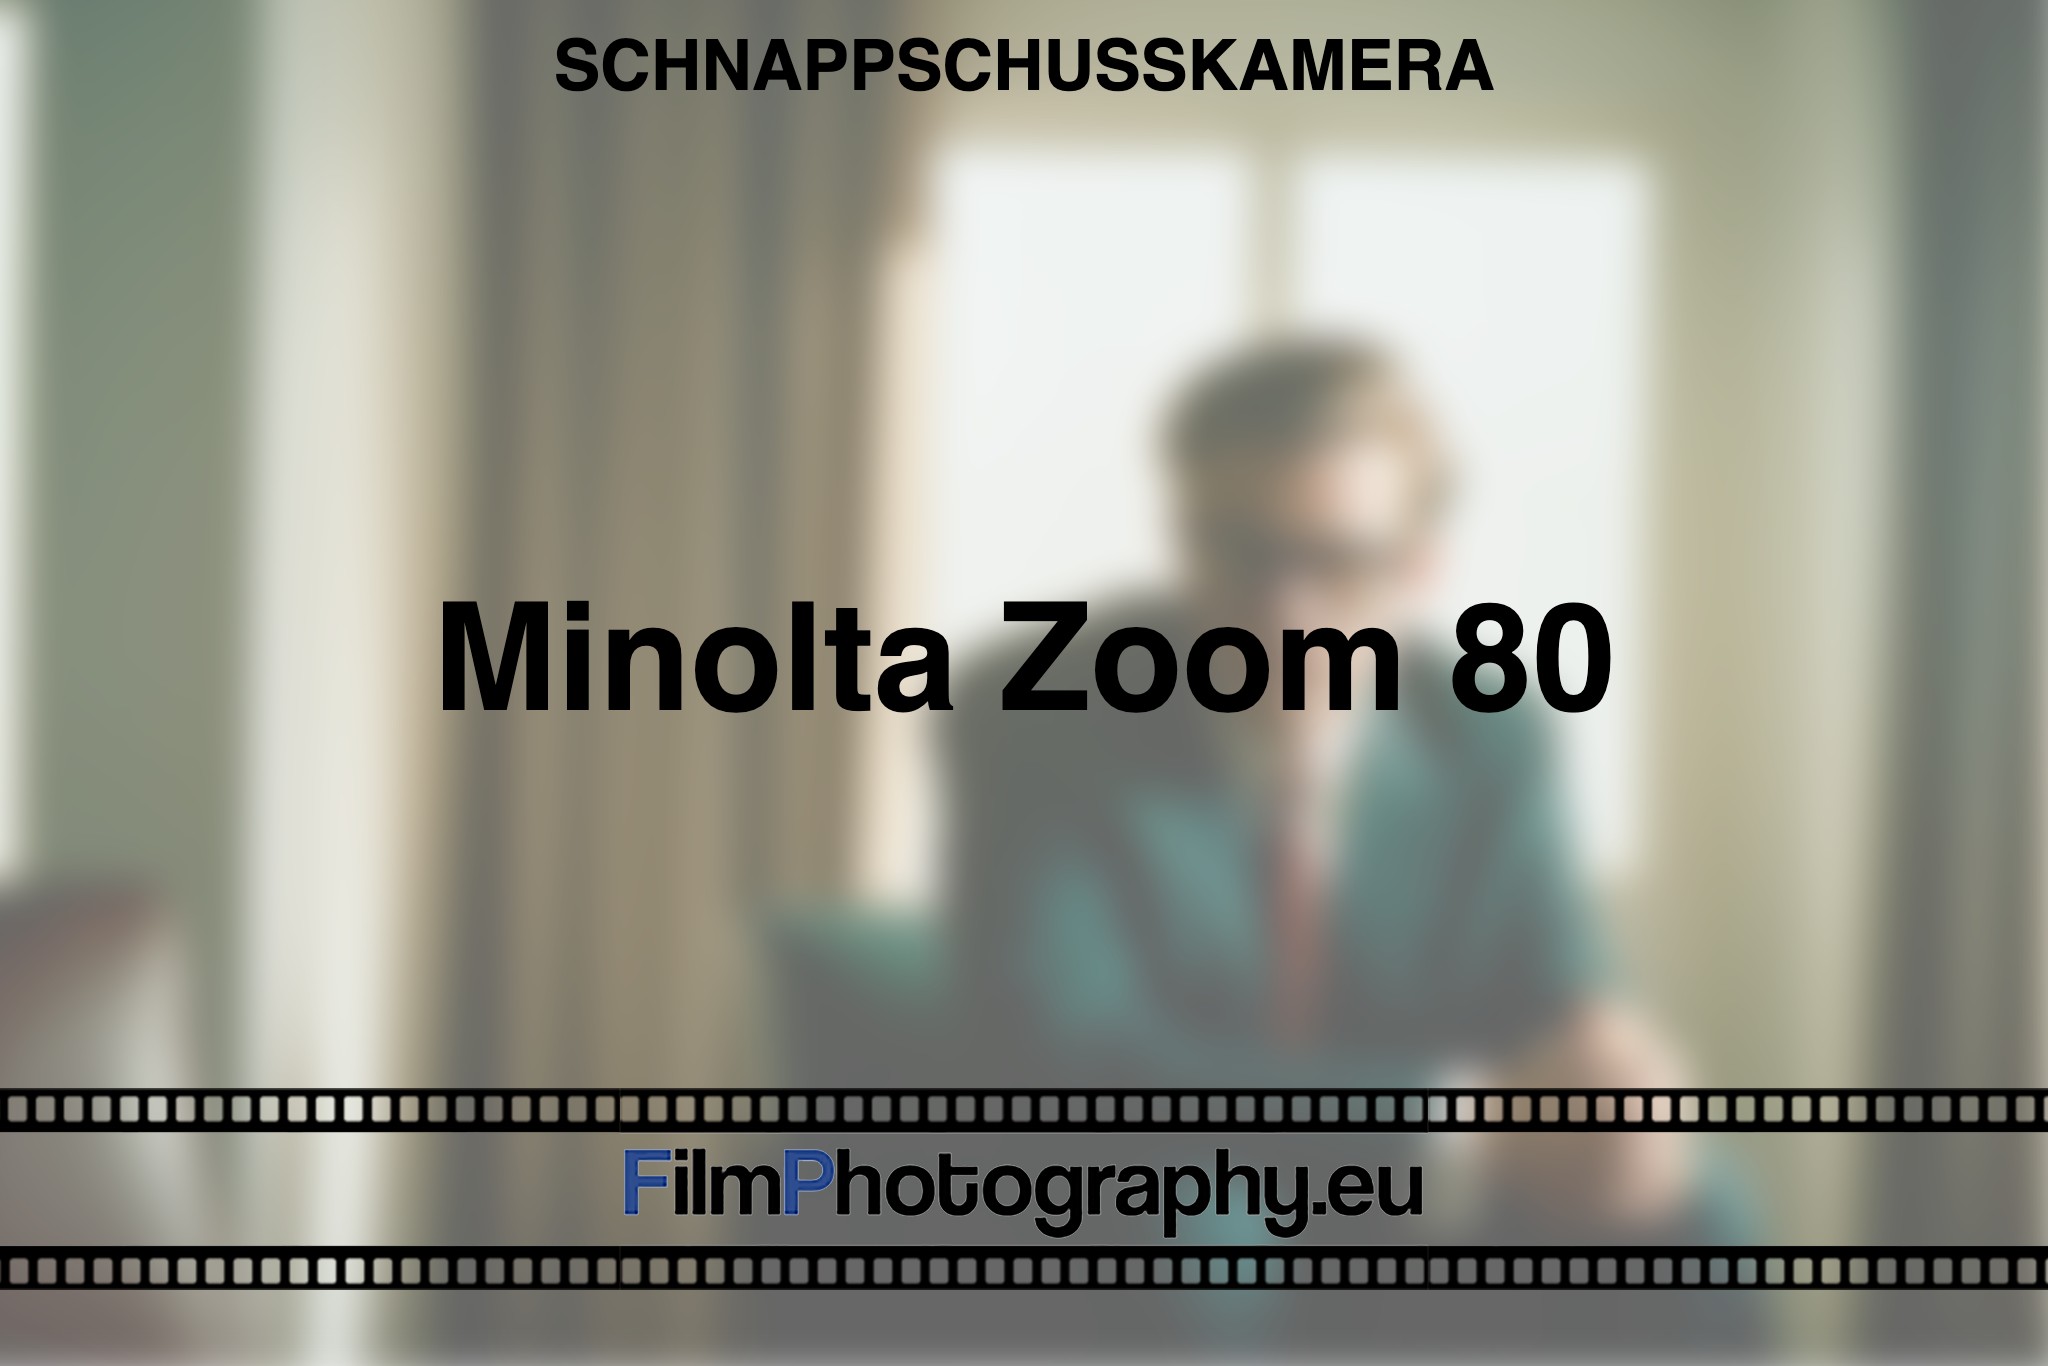 minolta-zoom-80-schnappschusskamera-bnv